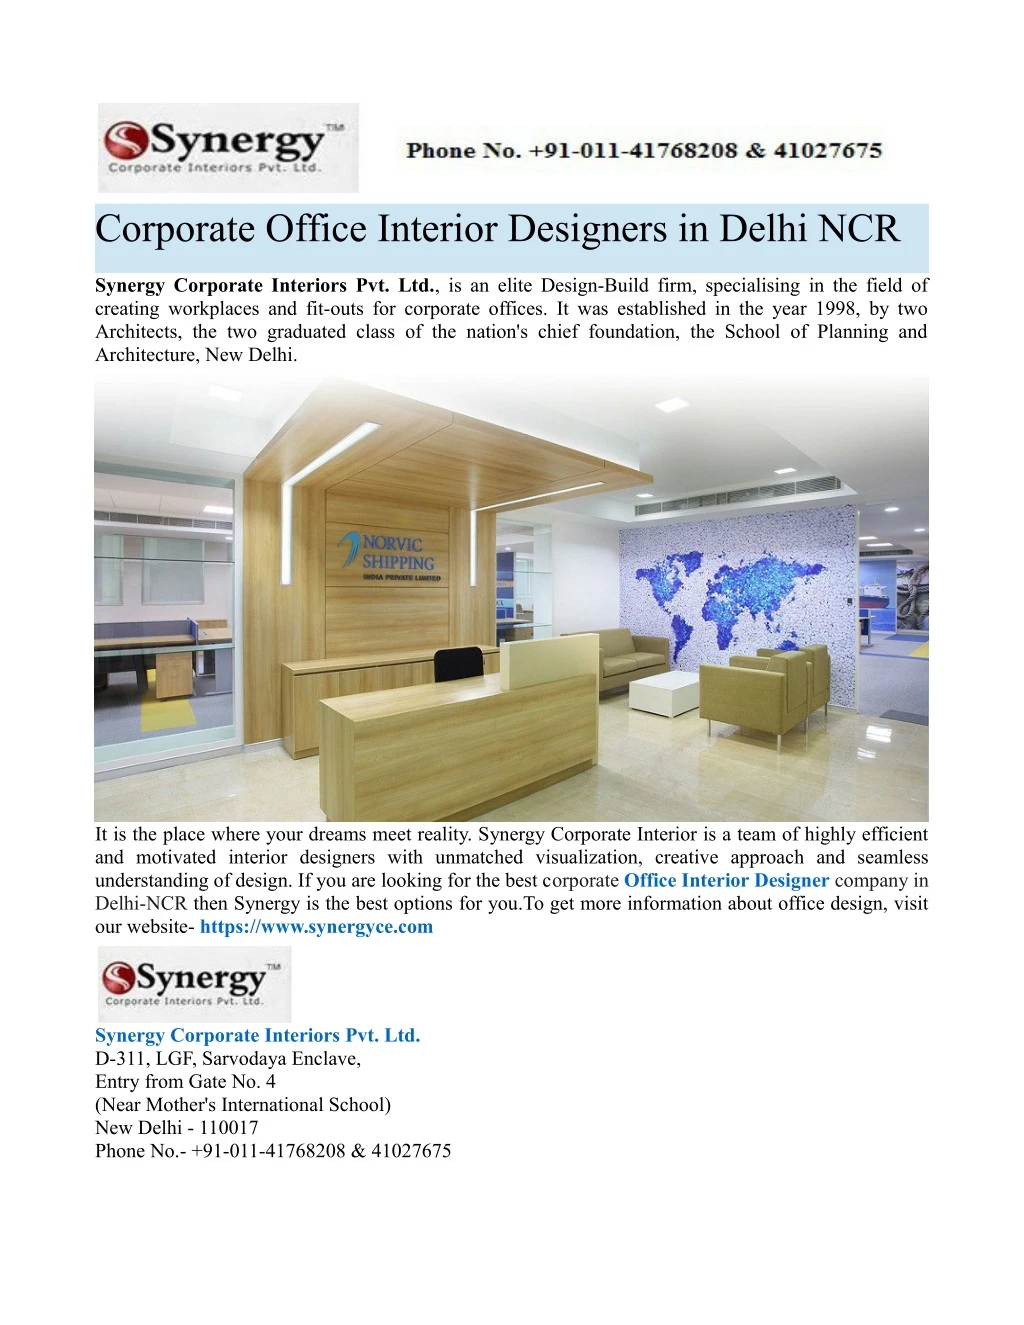 corporate office interior designers in delhi ncr